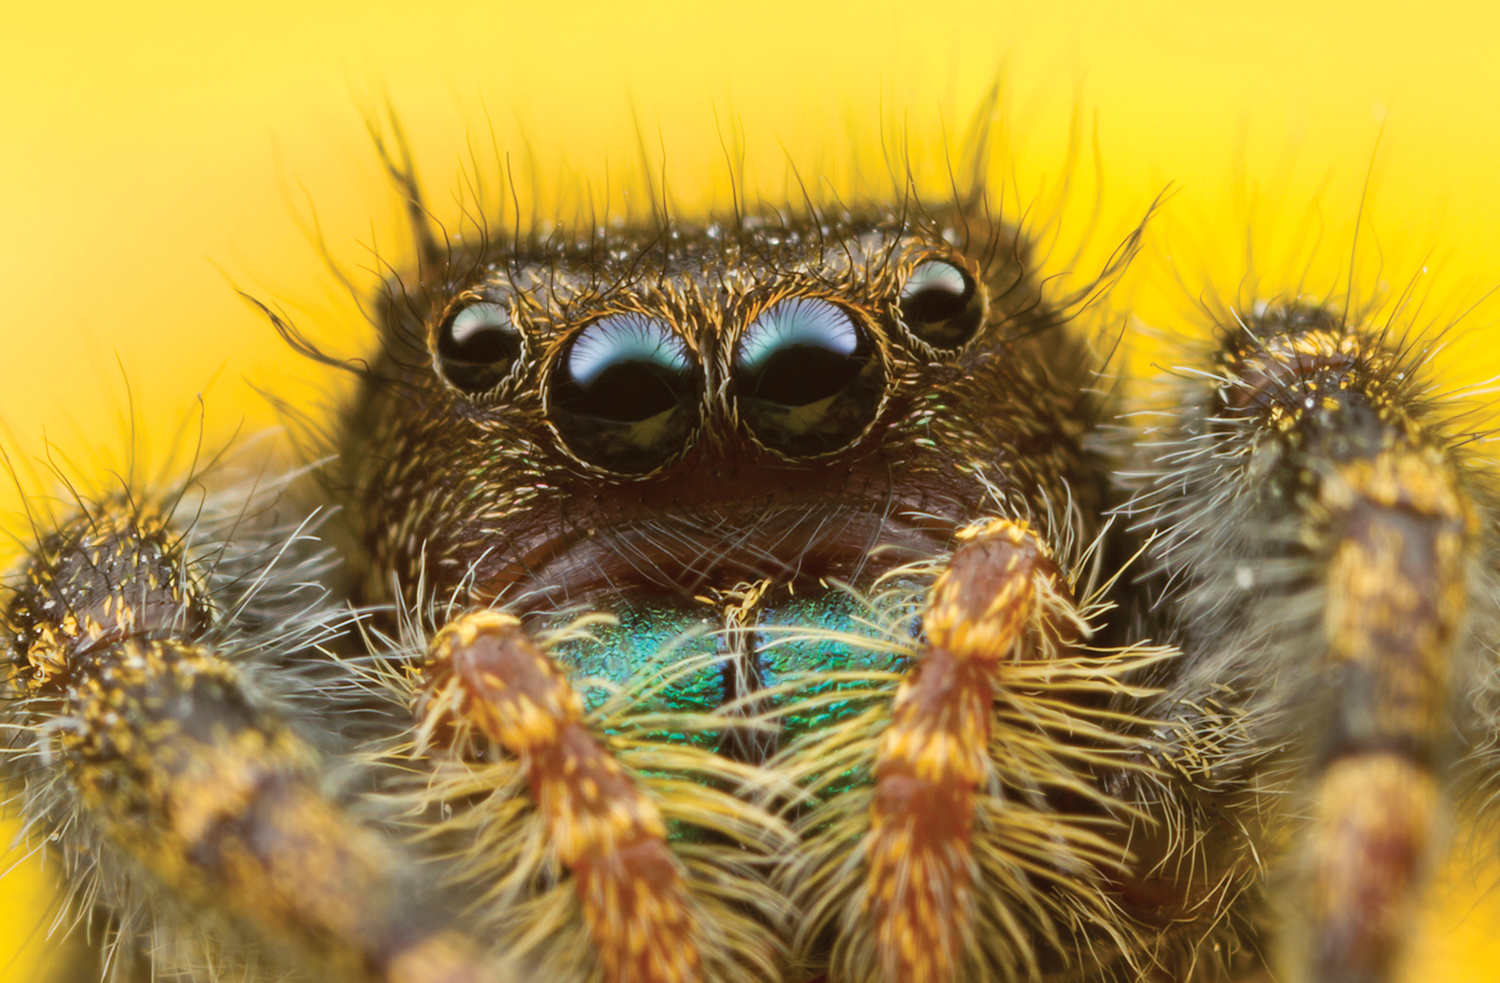 UC Davis Professors Ask Public to Help Name New Spider Species